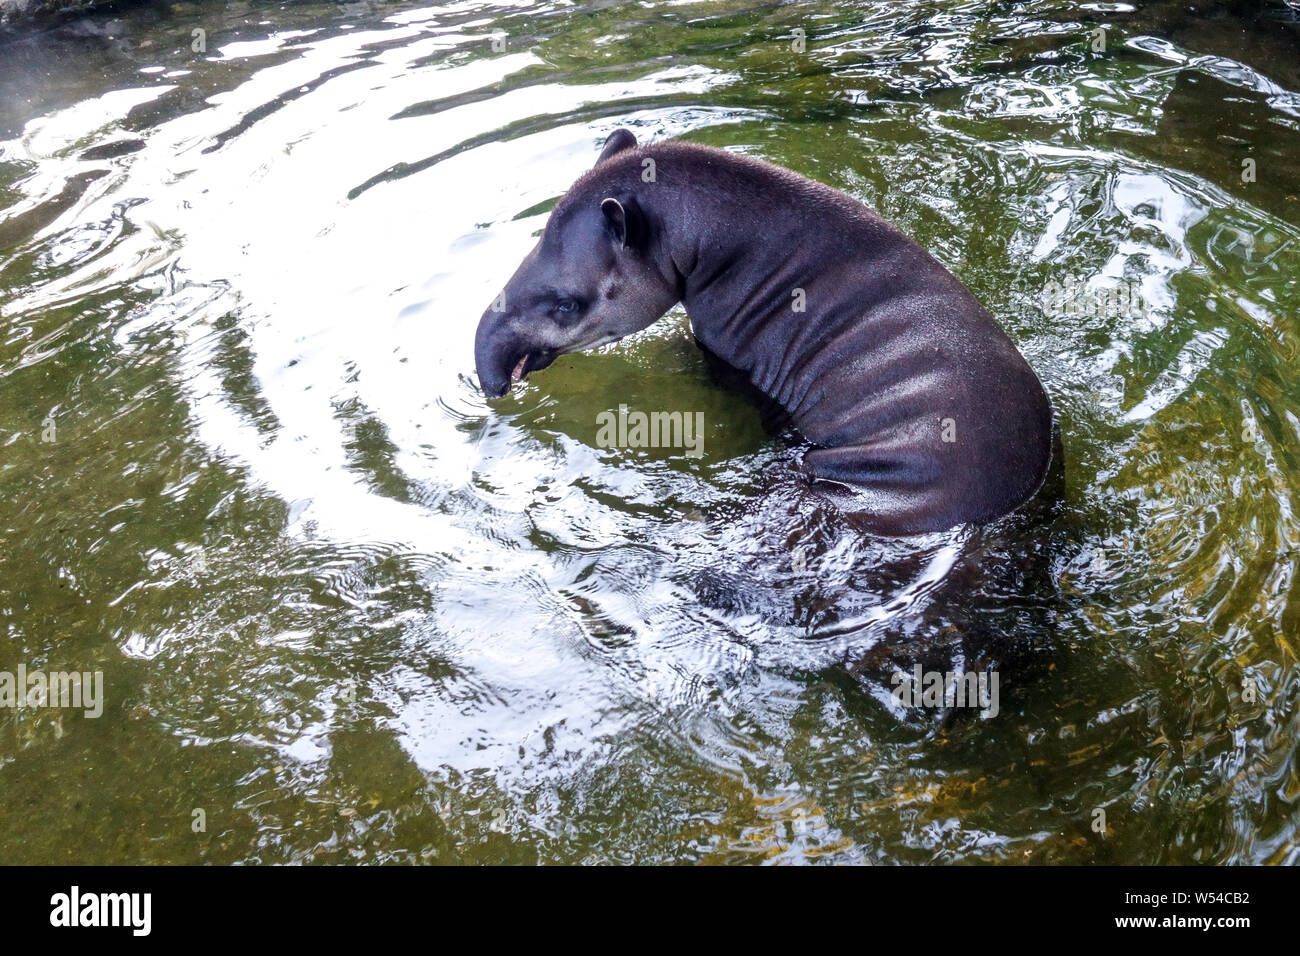 South American tapir, Tapirus terrestris, swims in water Stock Photo